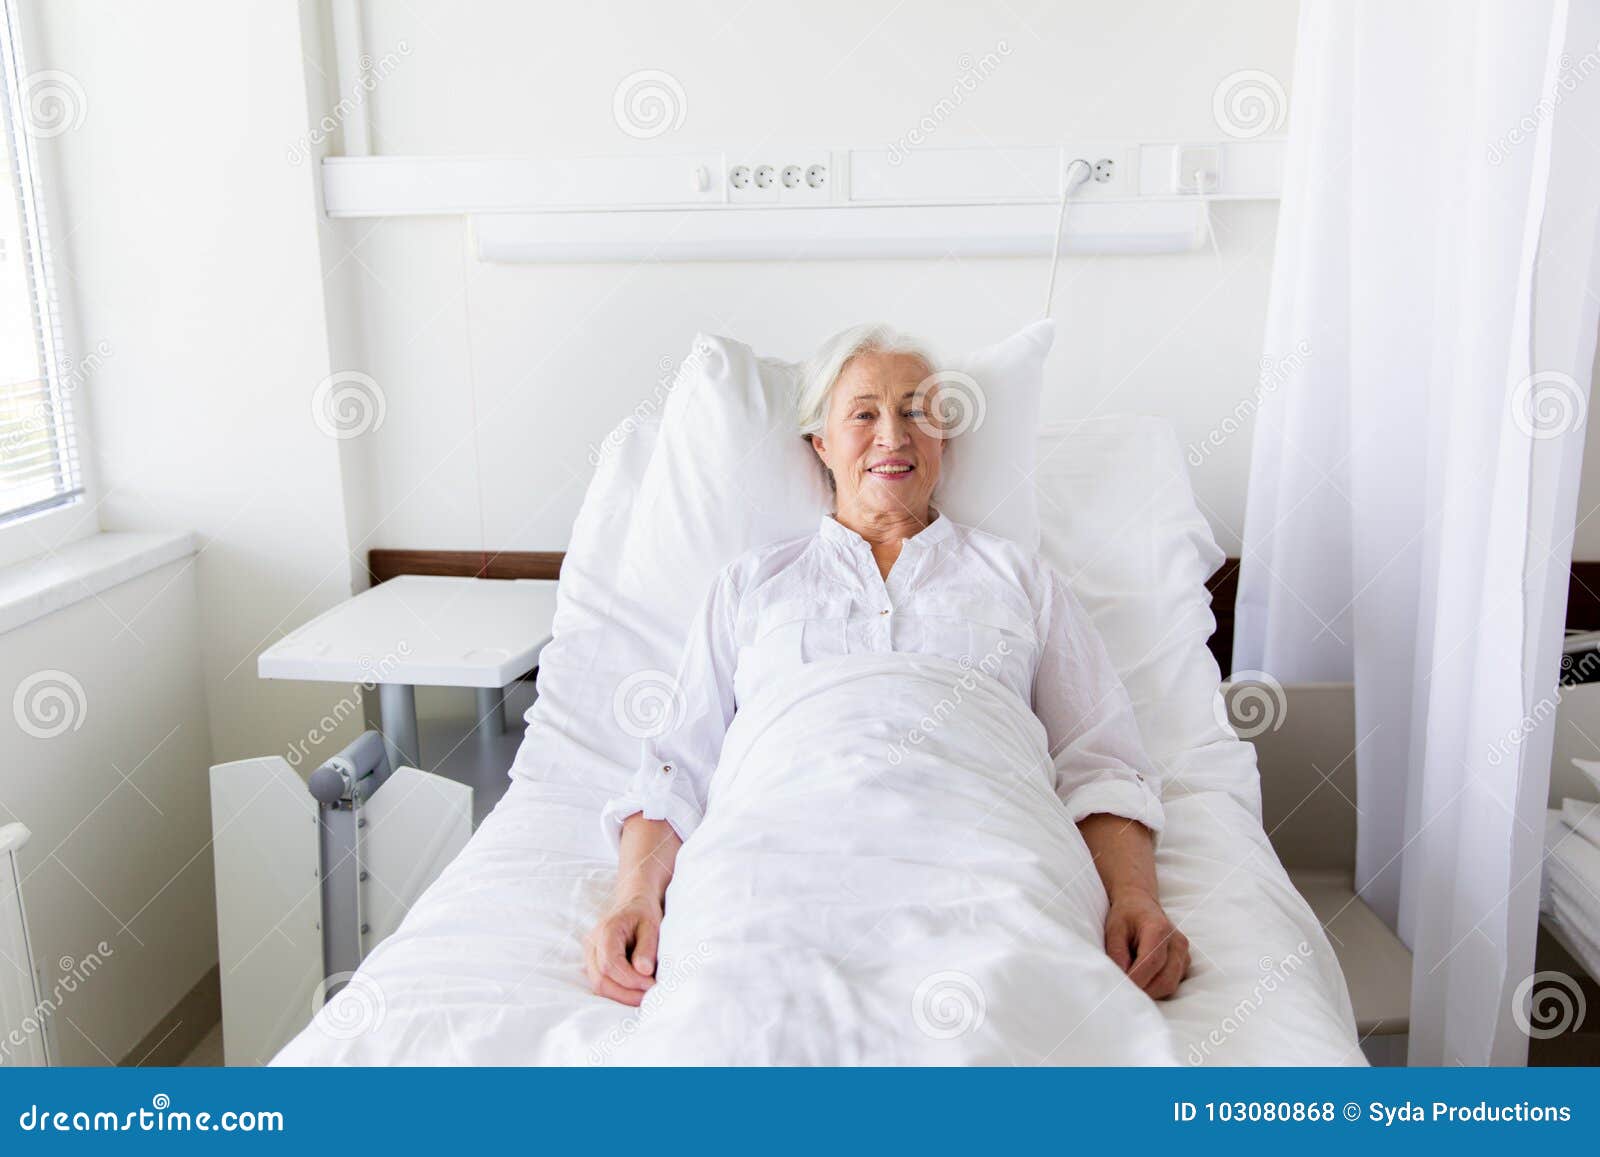 Smiling Senior Woman Lying On Bed At Hospital Ward Stock